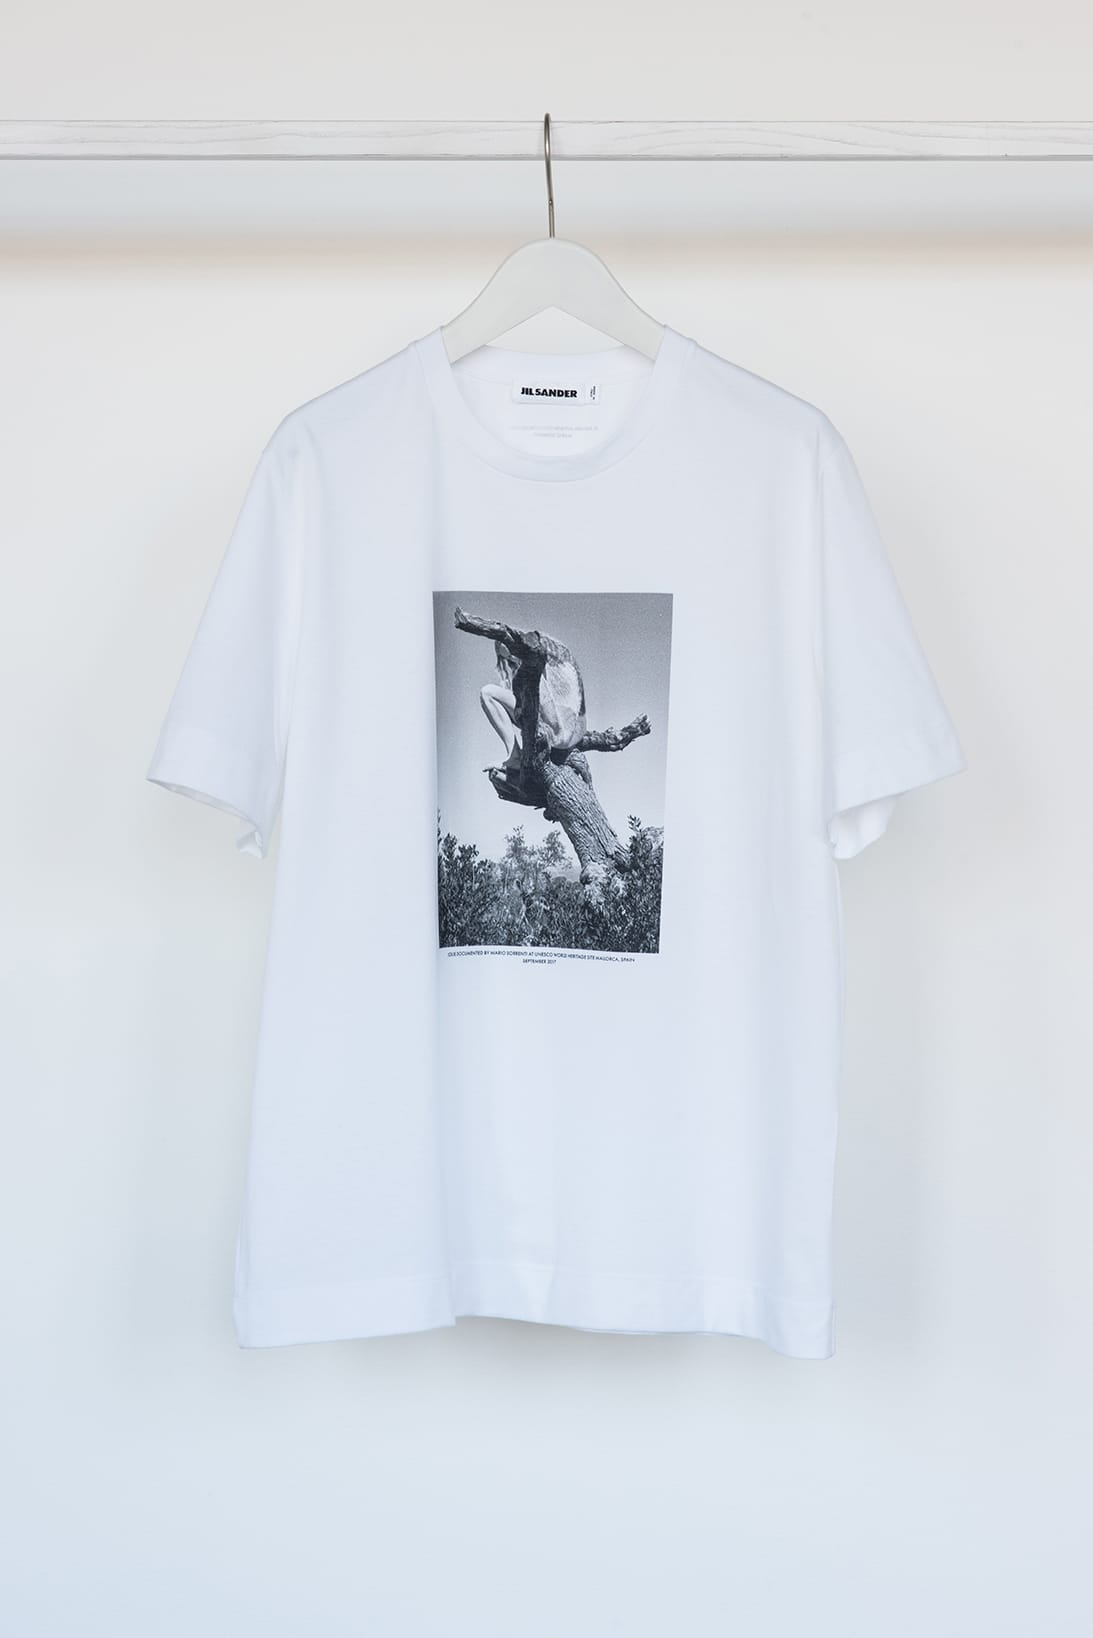 Jil Sander x Mario Sorrenti T Shirt Collection   Hypebeast